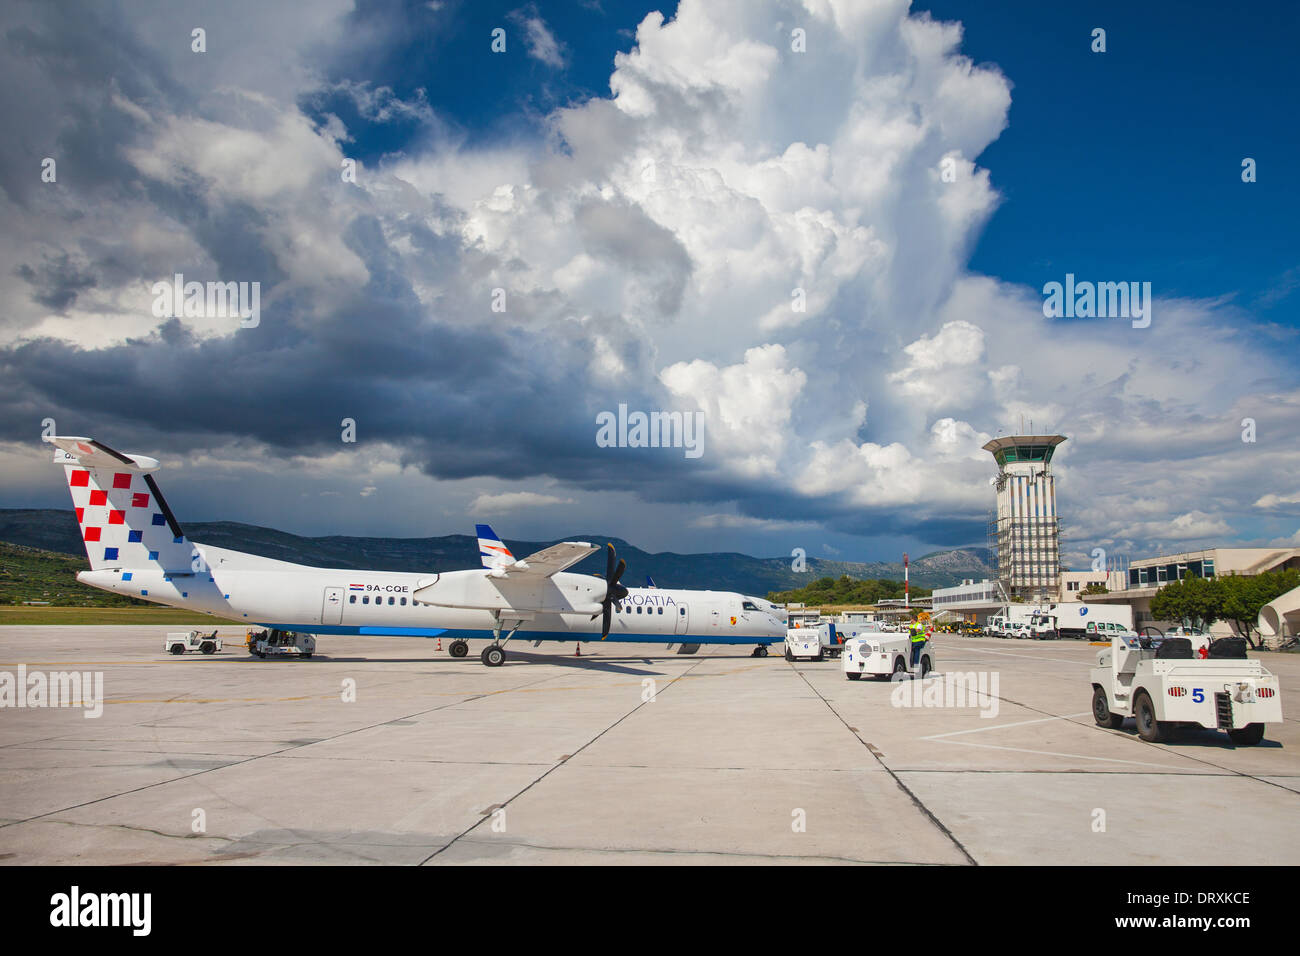 SPLIT, CROATIA - JUN 6: Croatia Airlines Dash 8 Q400 parked on a runway of Split Airport Stock Photo